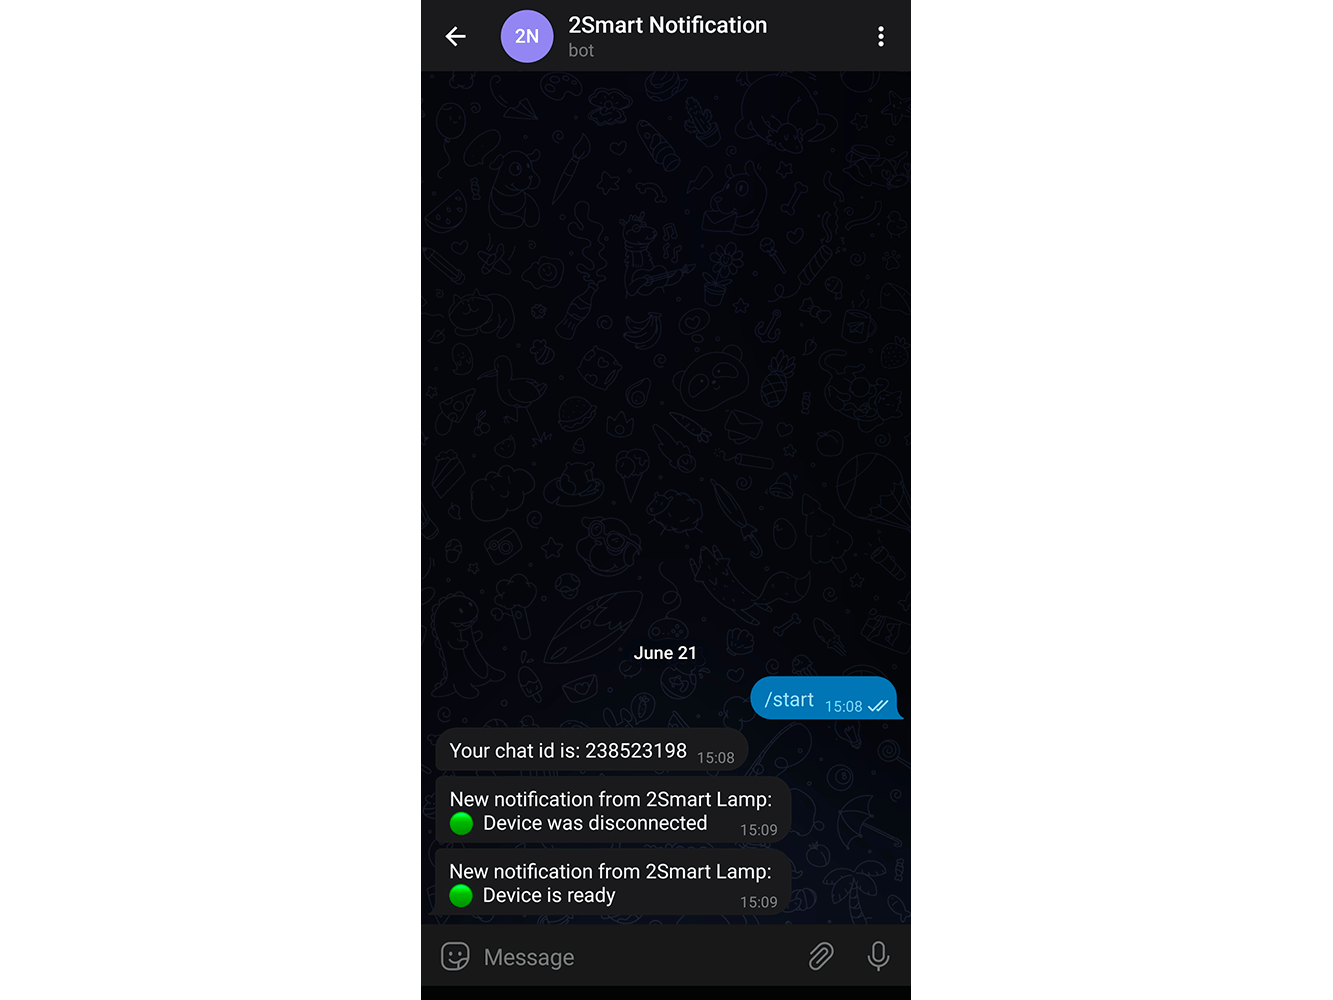 The 2Smart Notification Telegram bot